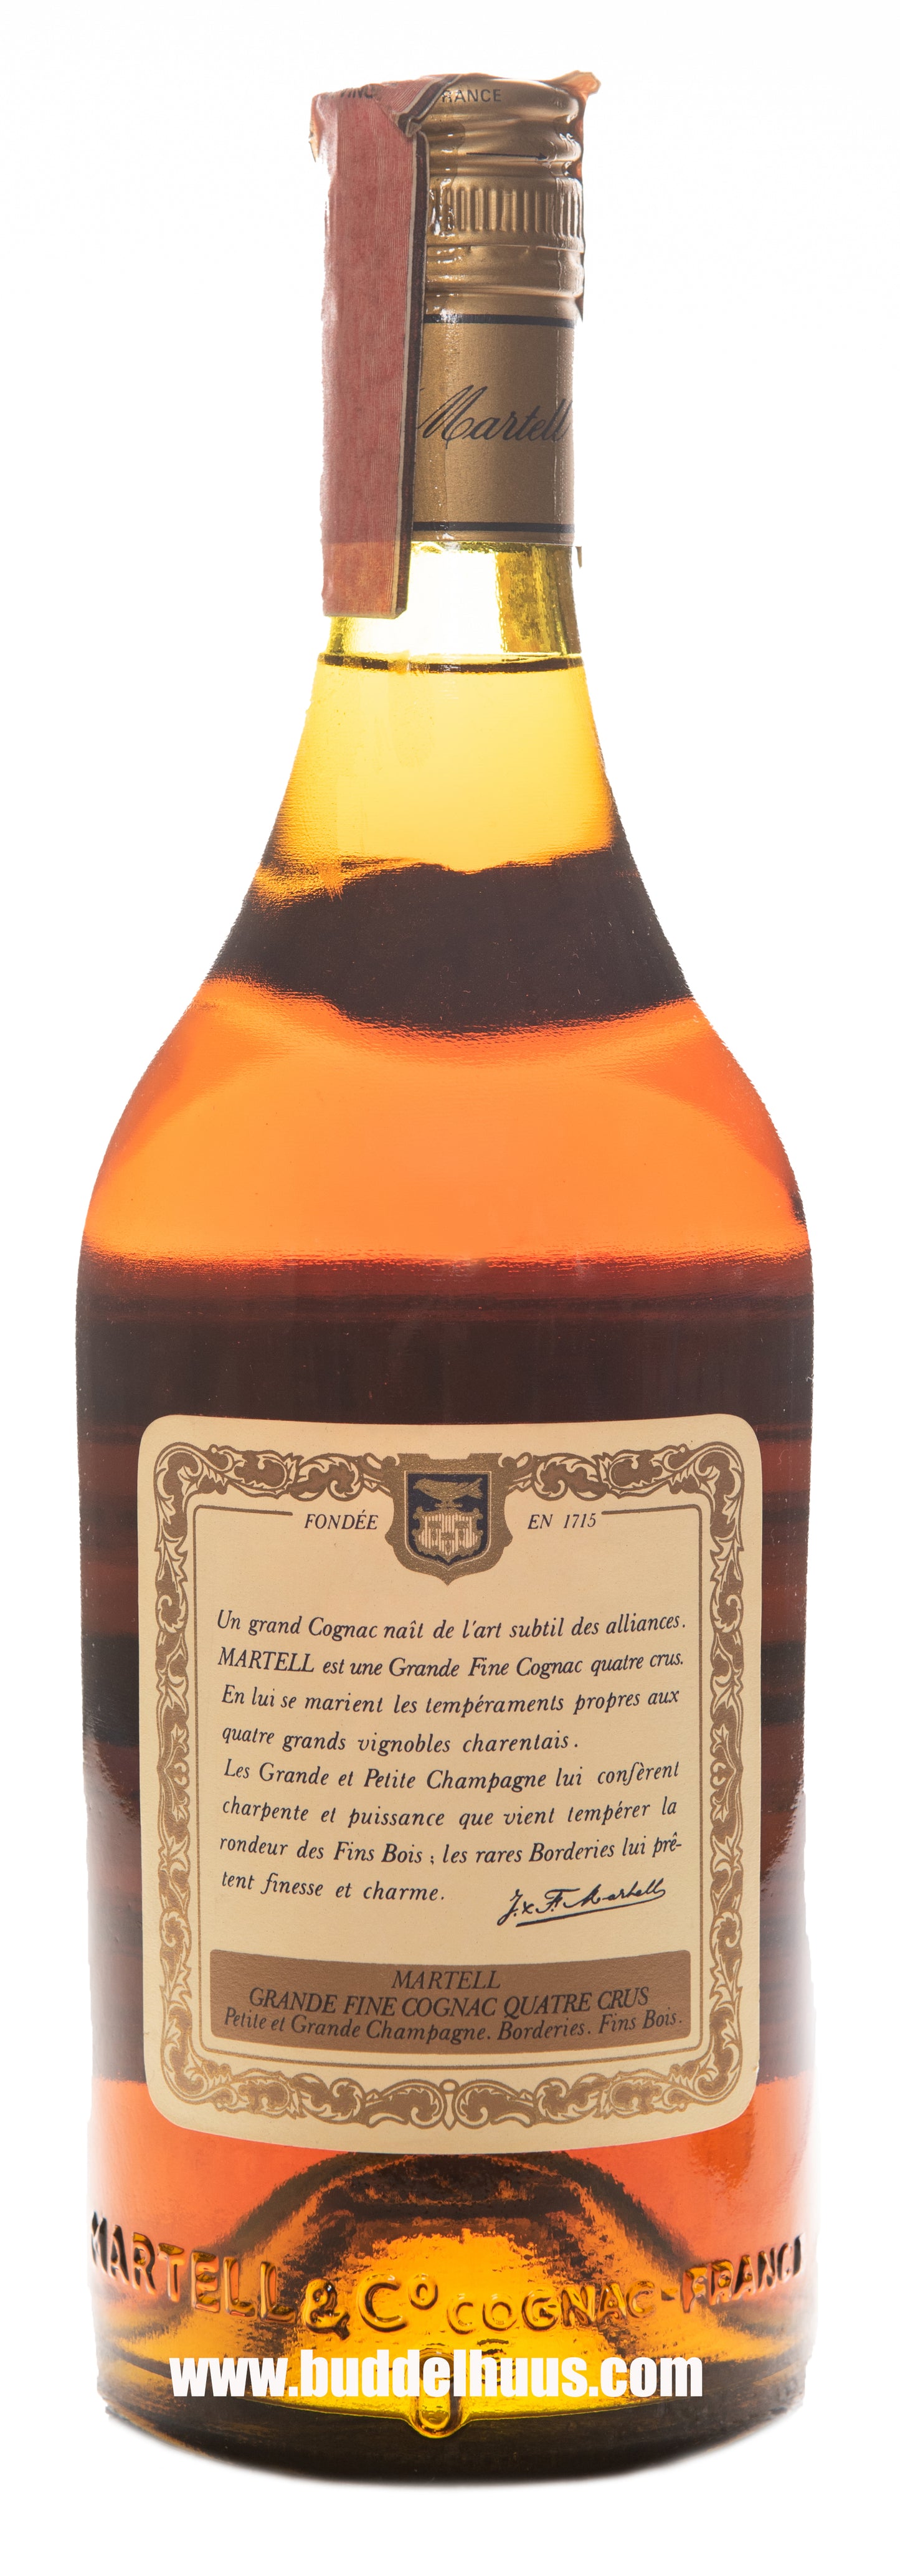 Martell VS Grande Fine Cognac 1970s